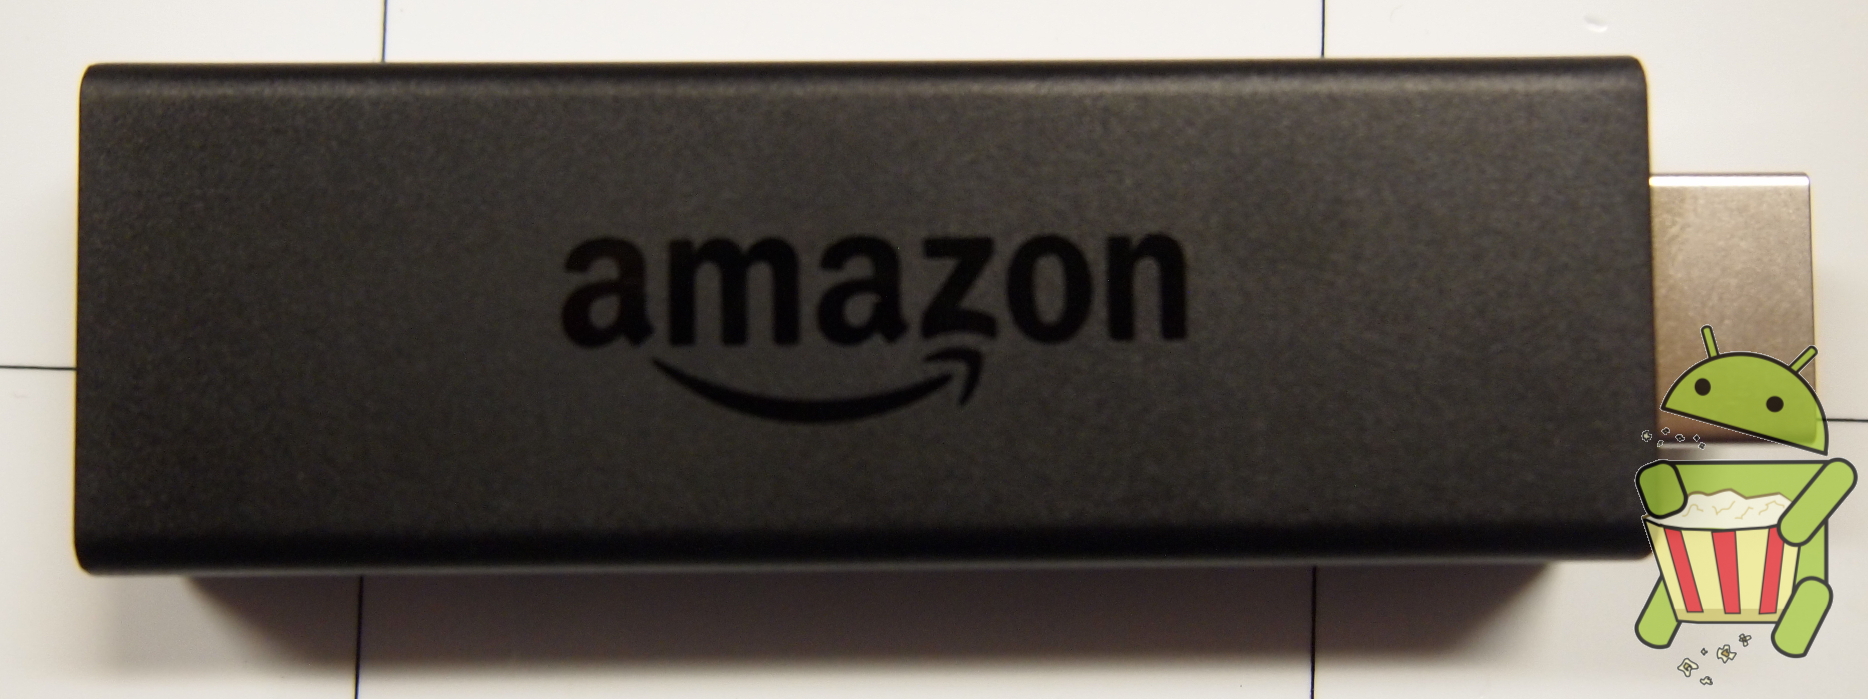 Amazon Fire TV Stick.jpg